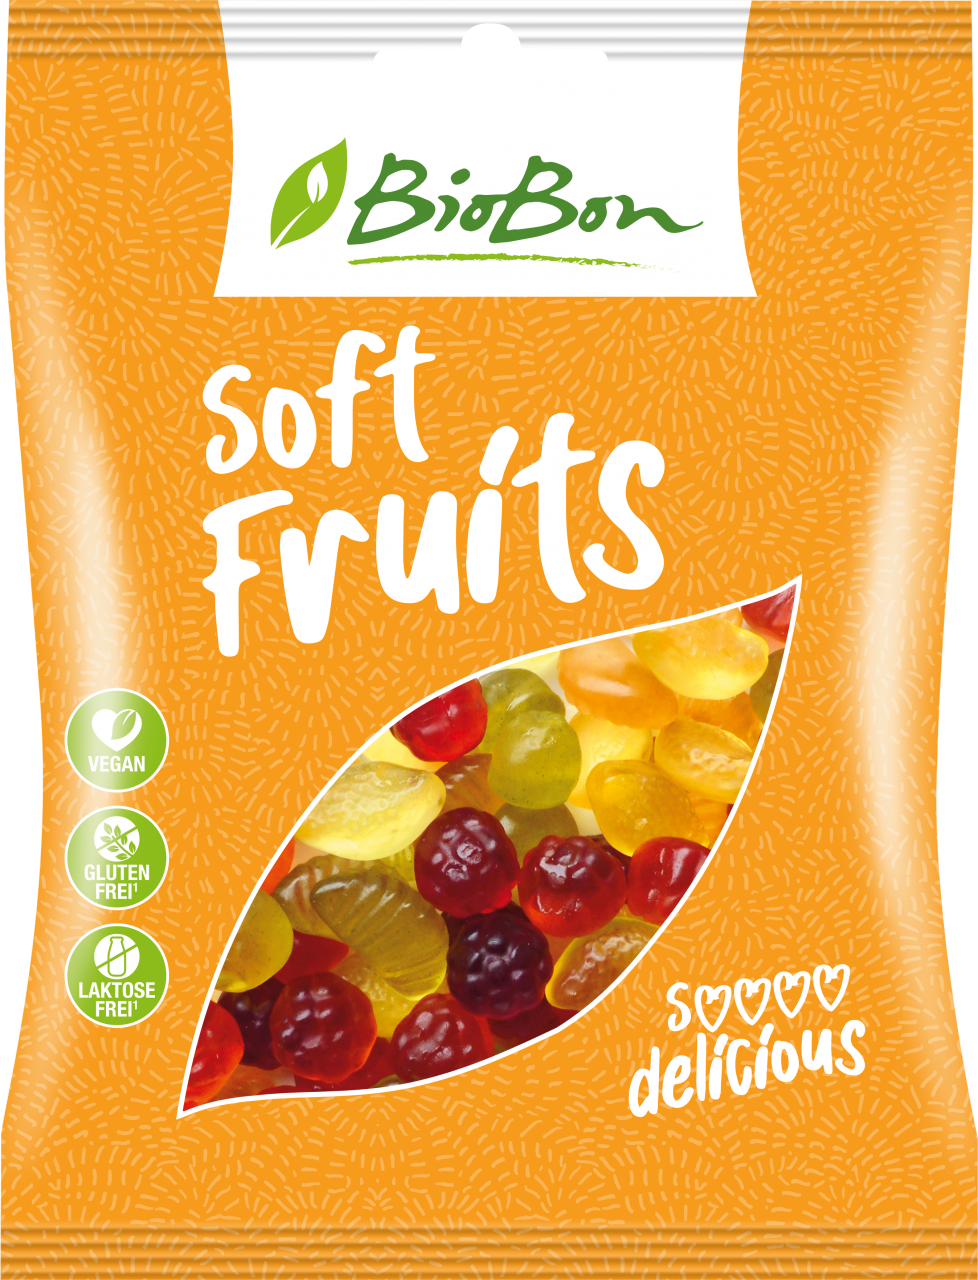 BioBon Soft Fruits